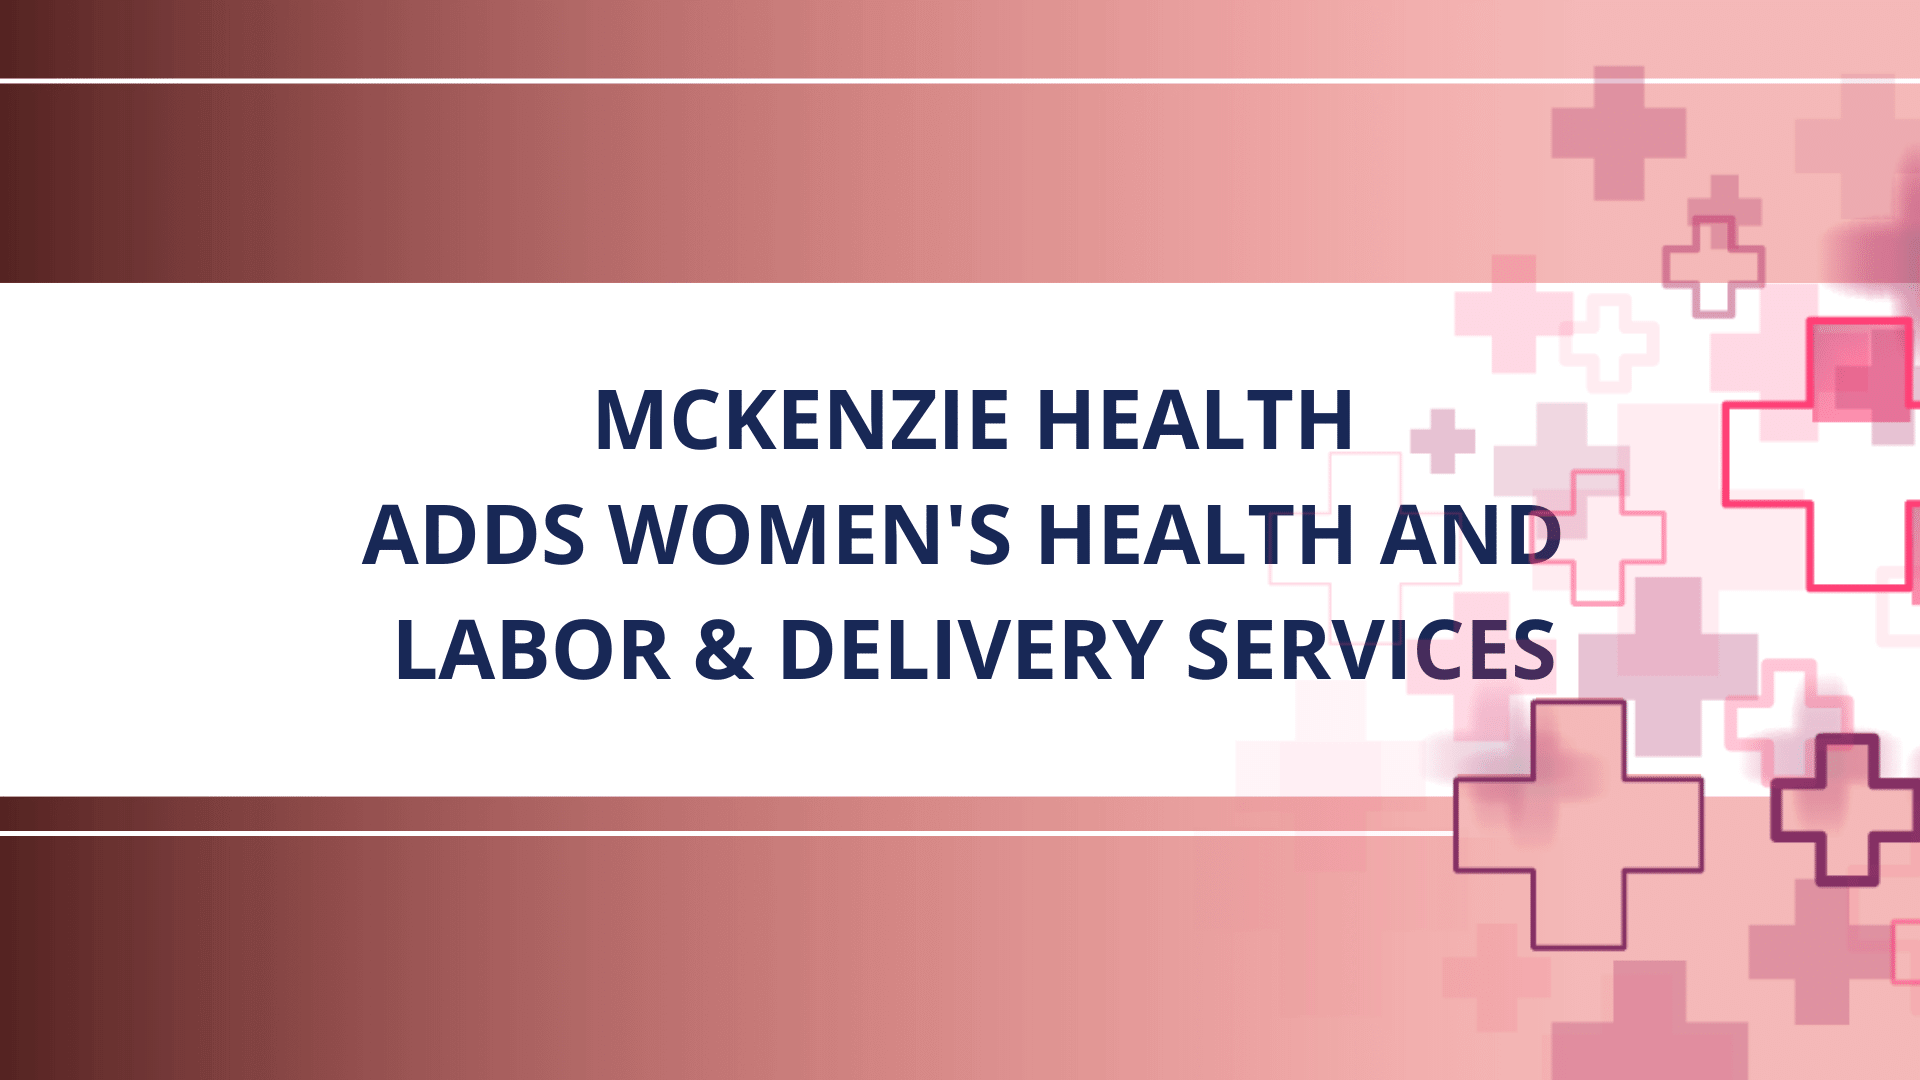 Providing Women’s Health Services in Western North Dakota